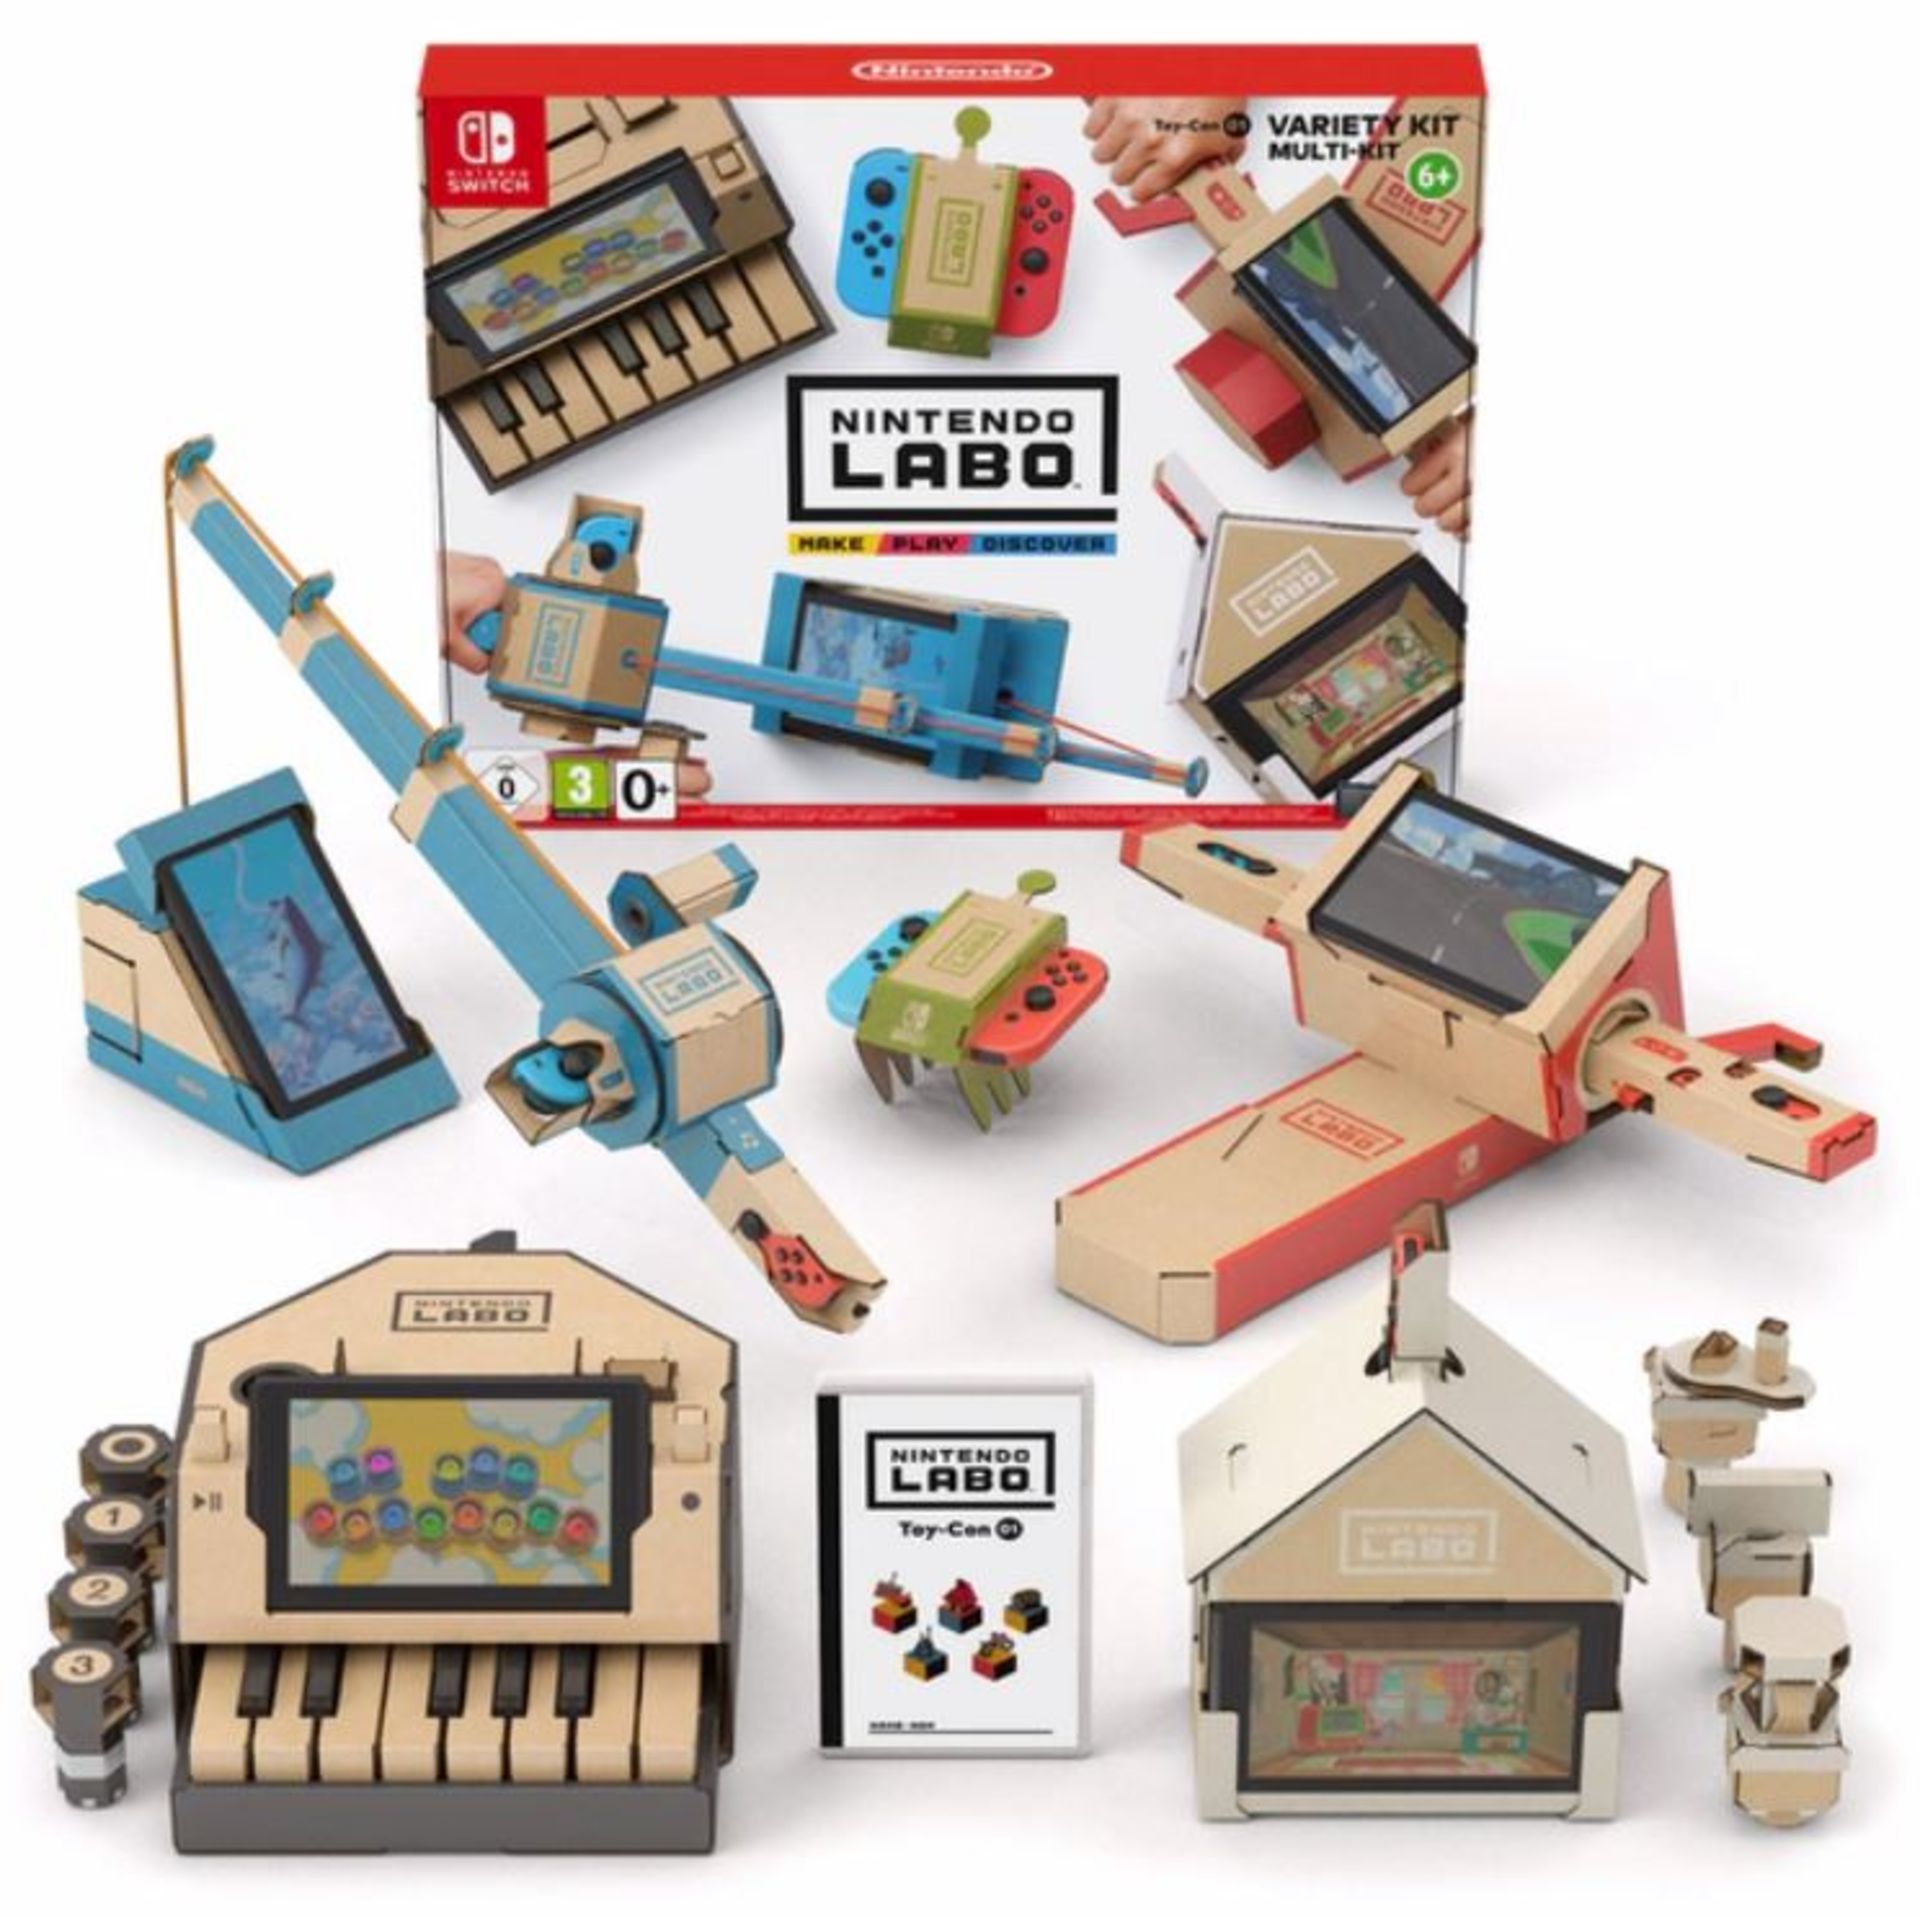 (R14A) 1x Nintendo Switch Nintendo Labo Toy-Con 01 (Variety Kit Multi-Kit). RRP £48.99. New, Sealed